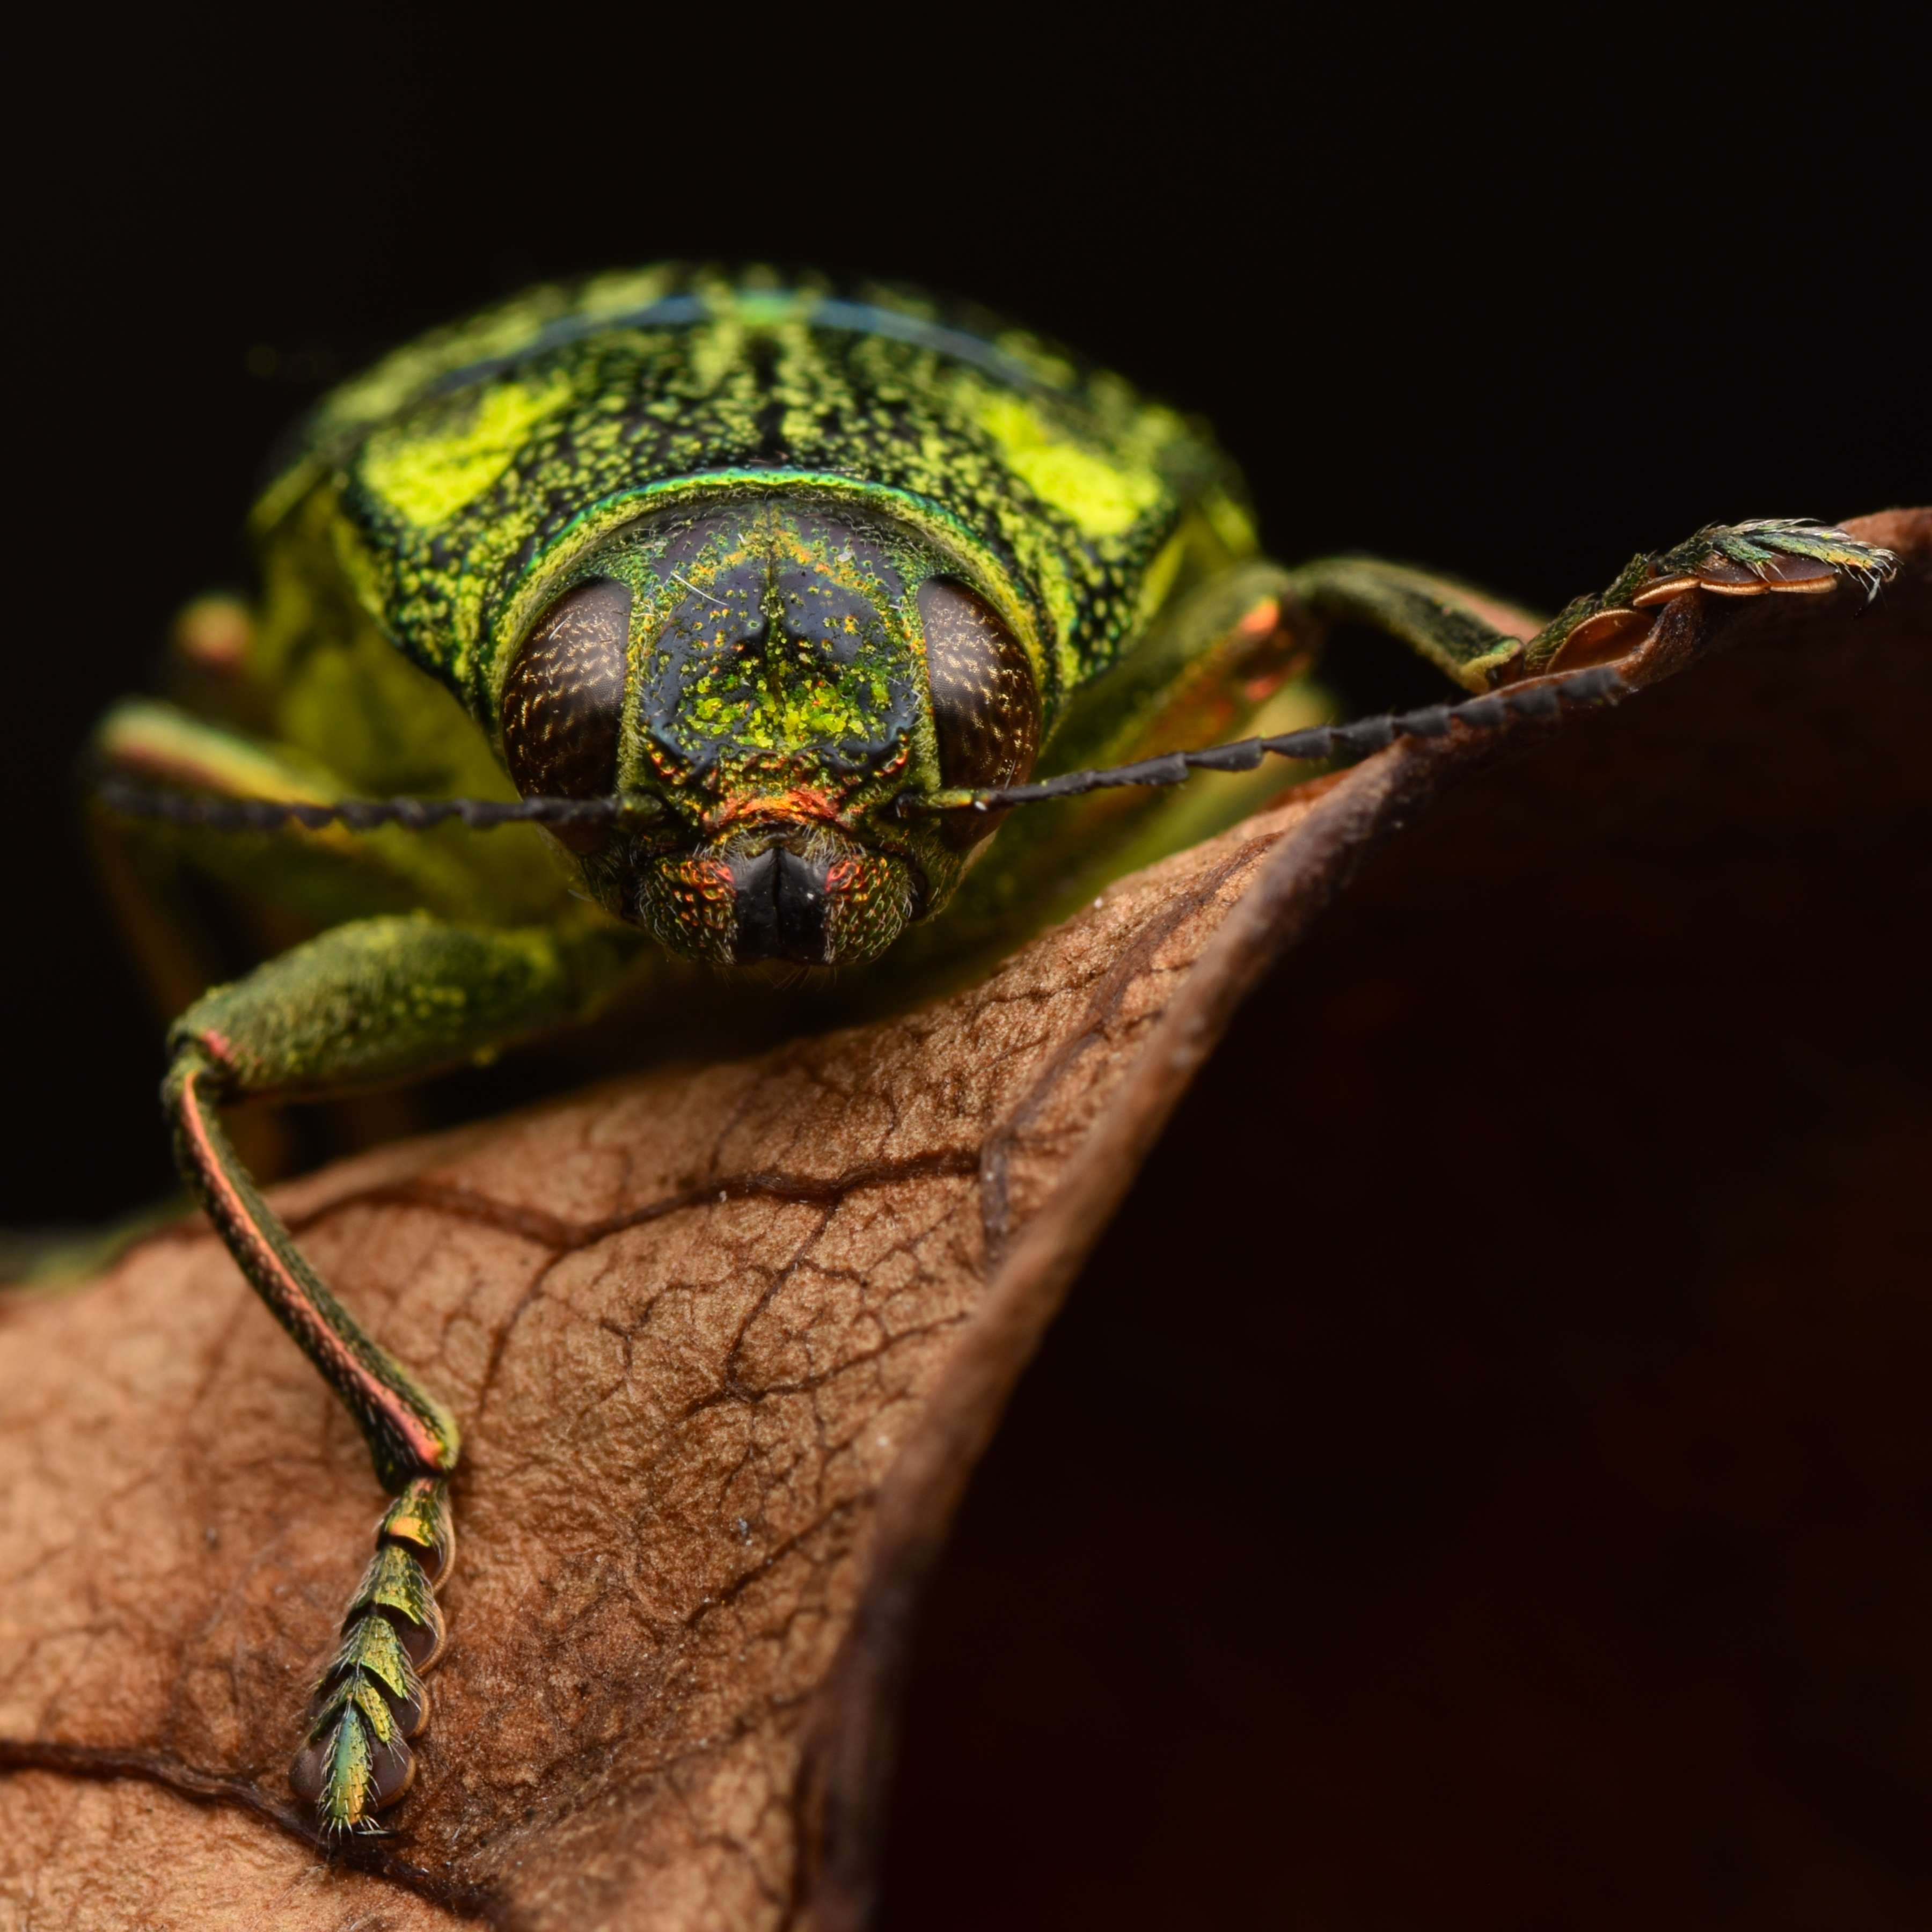 A beetle up close